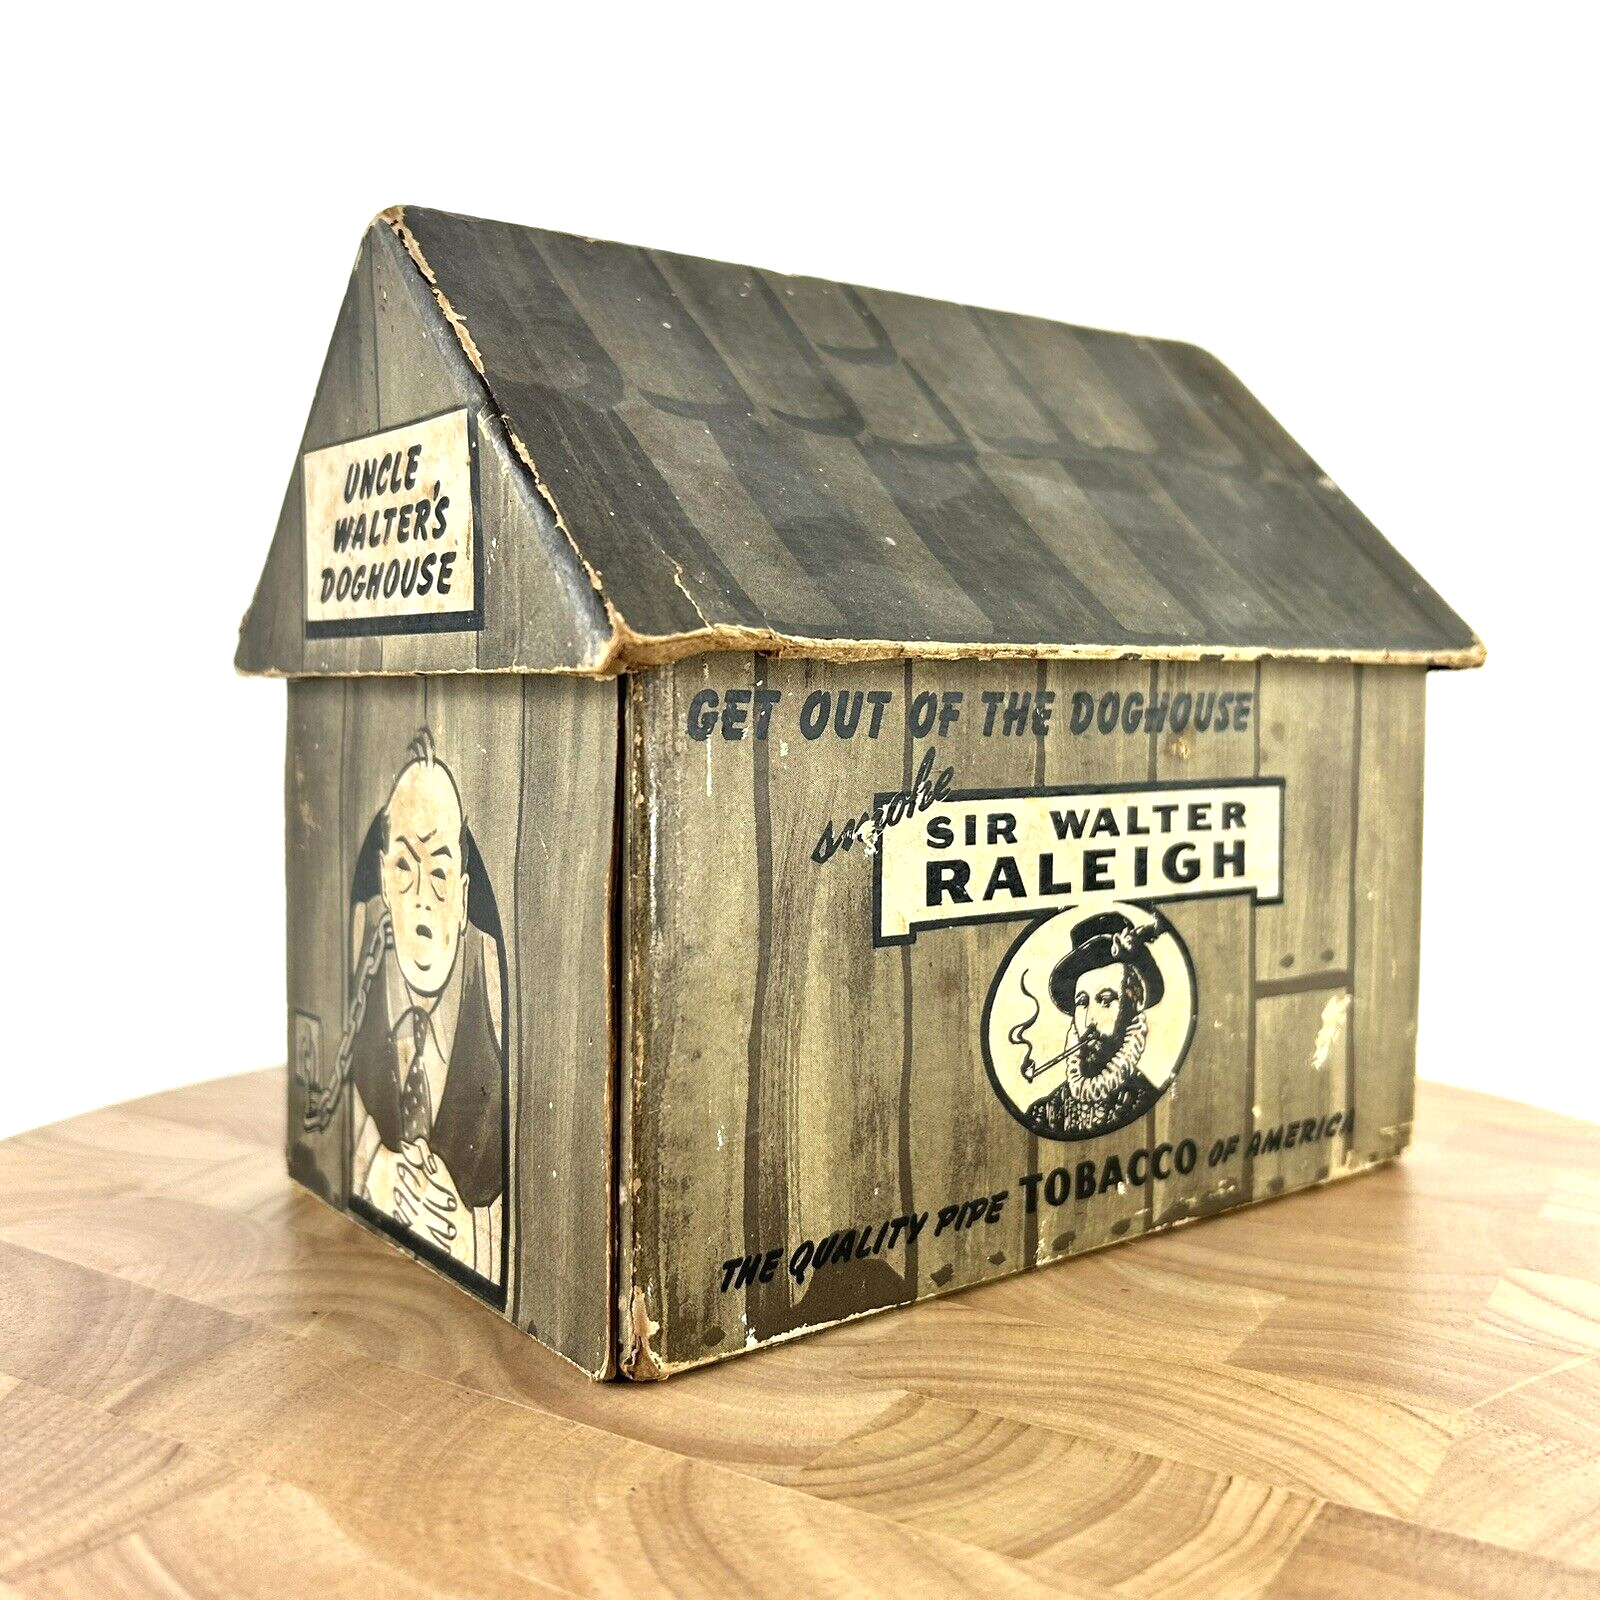 RARE cardboard Sir Walter Raleigh Uncle Walters dog house radio show tobacco box